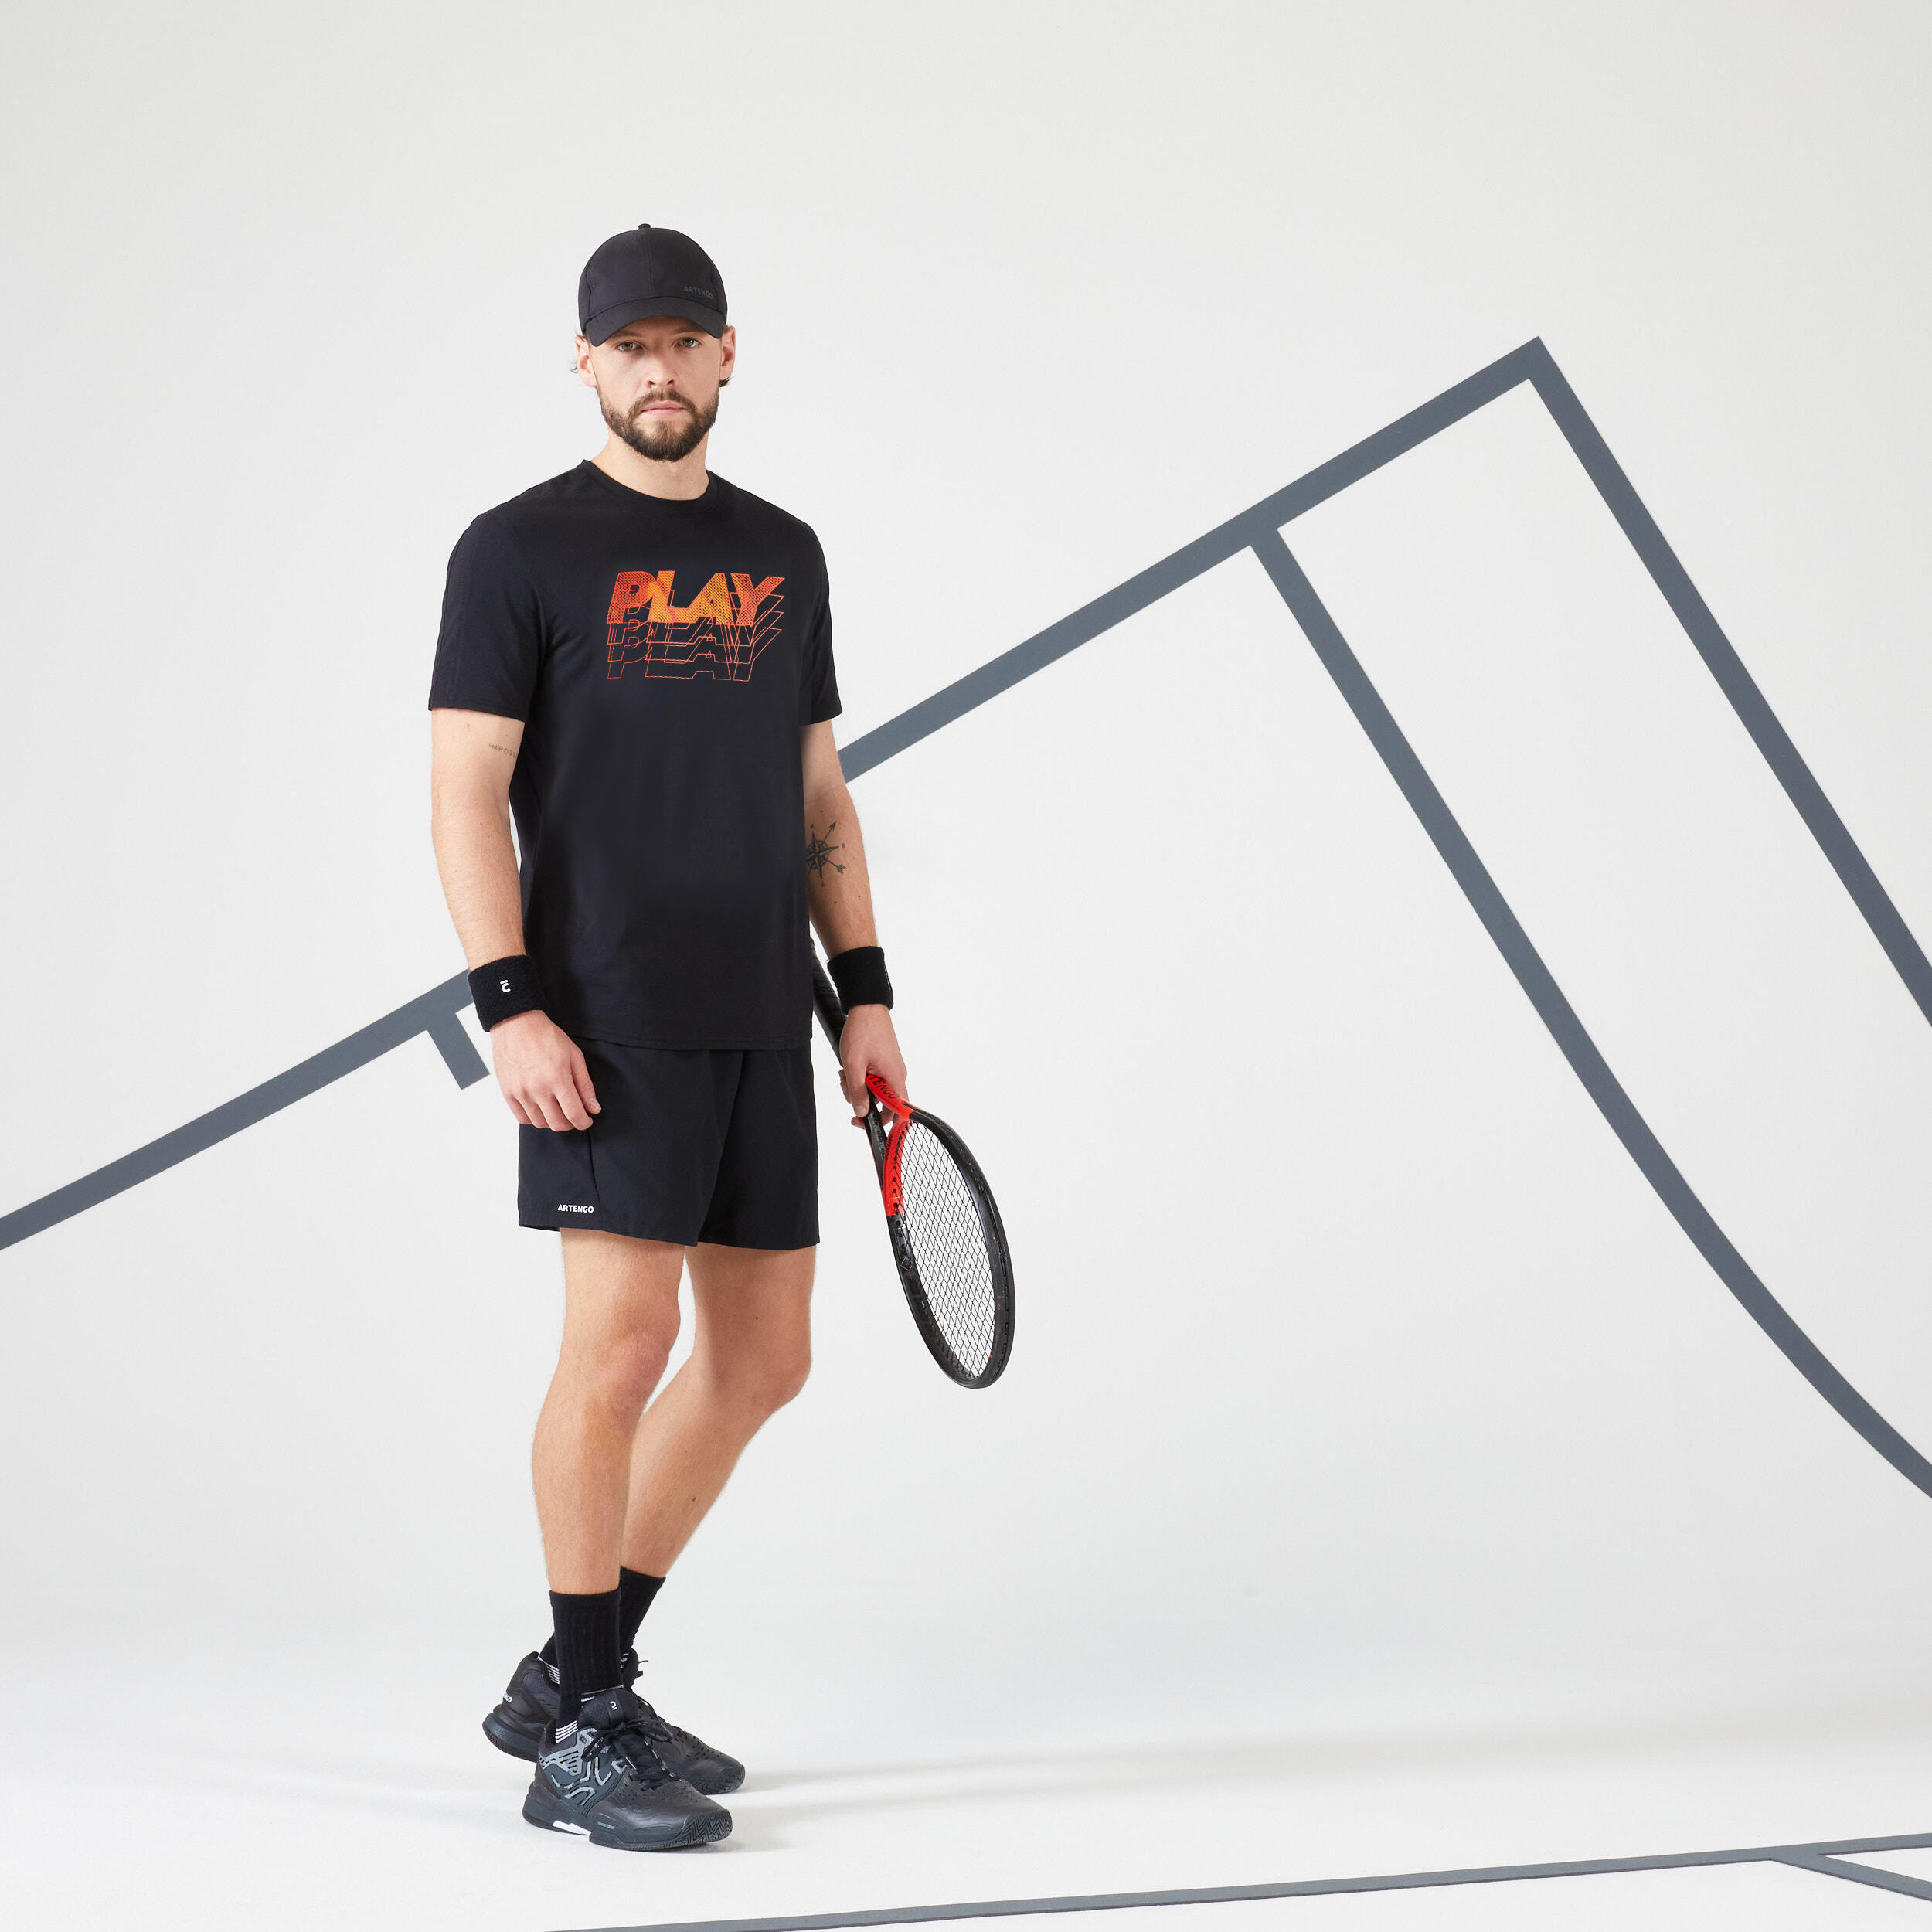 ARTENGO Men's Tennis T-Shirt Soft - Black Red